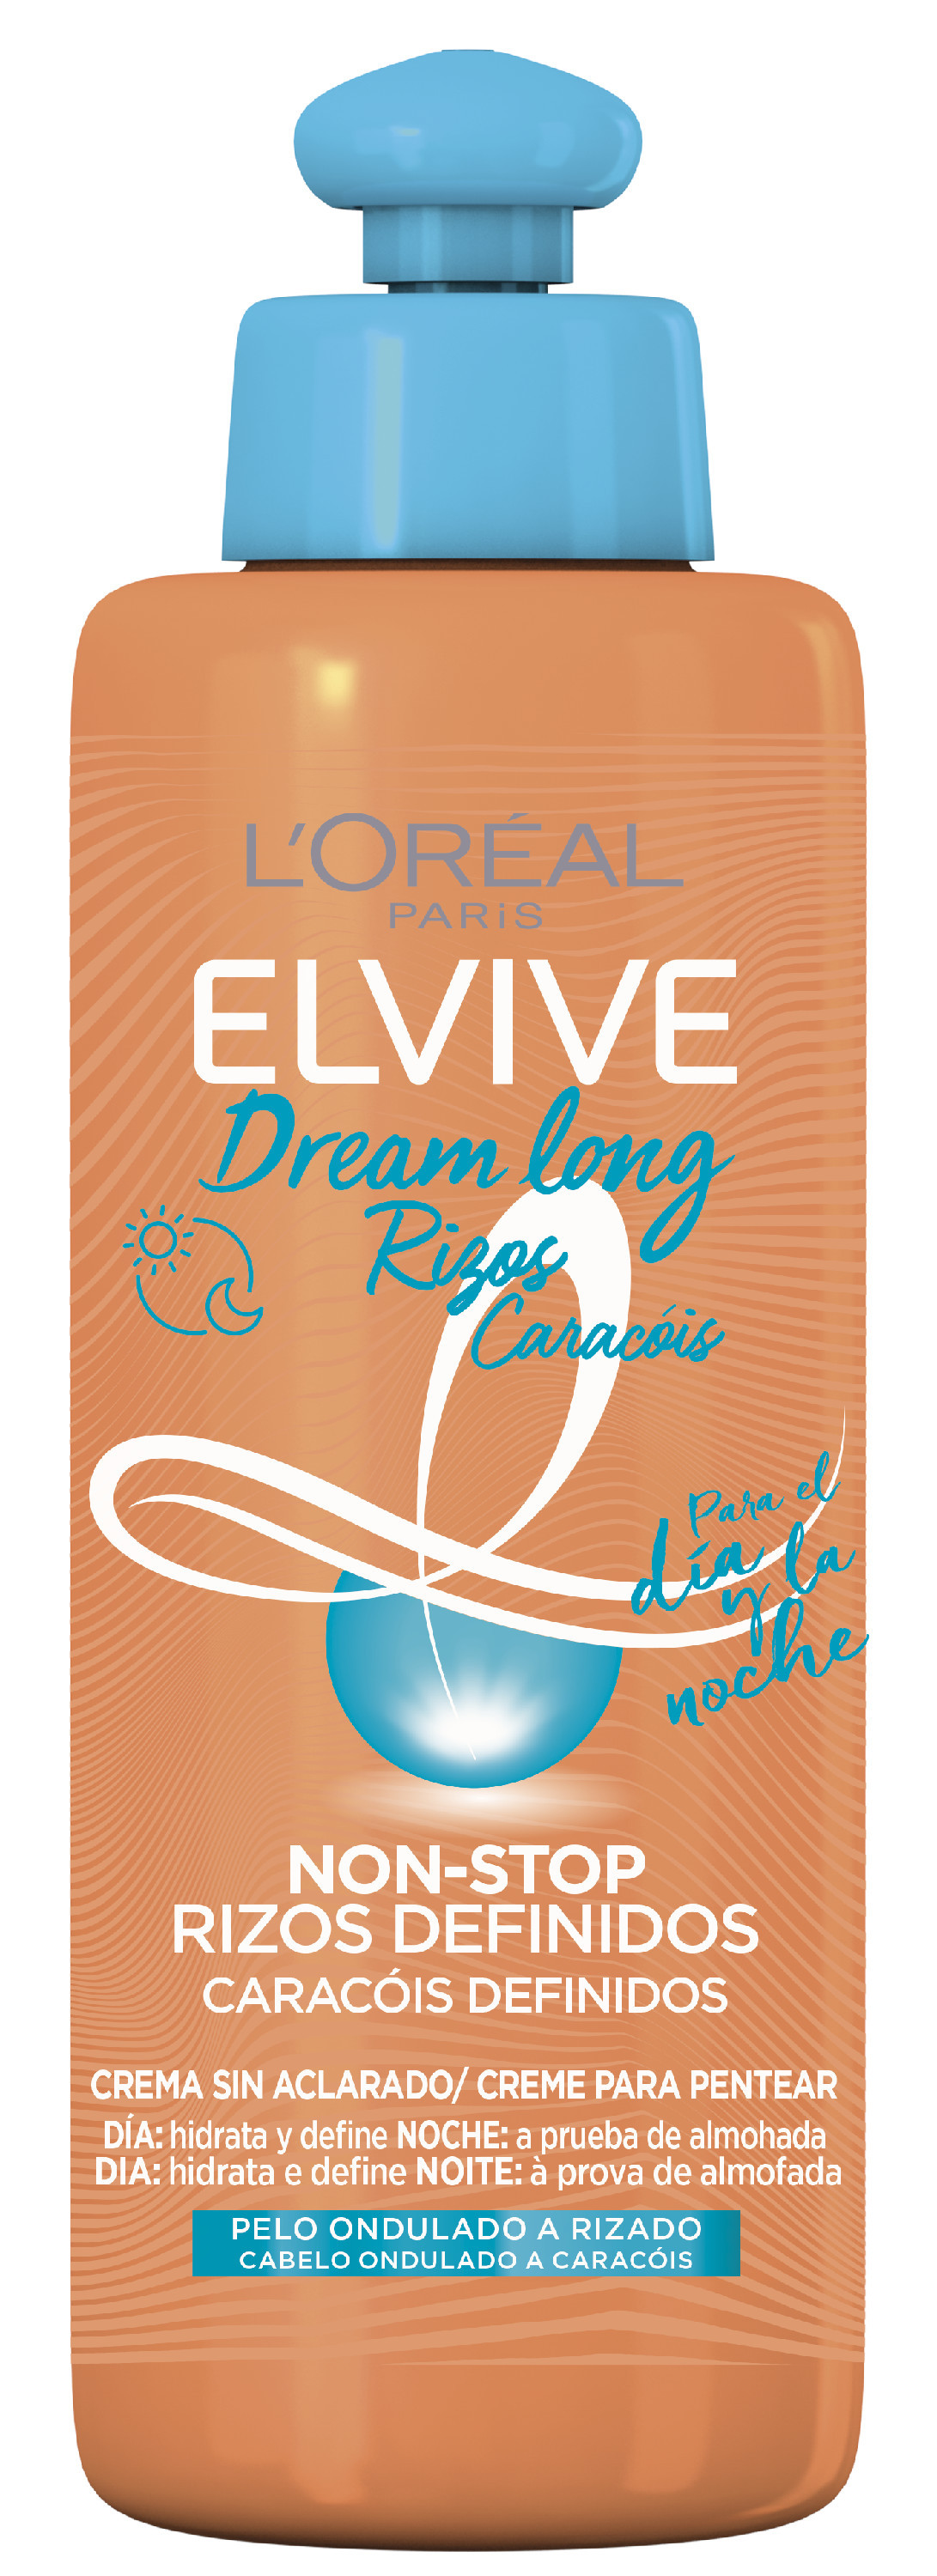 ELVIVE dream long champú L'Oréal París, Champús - Perfumes Club